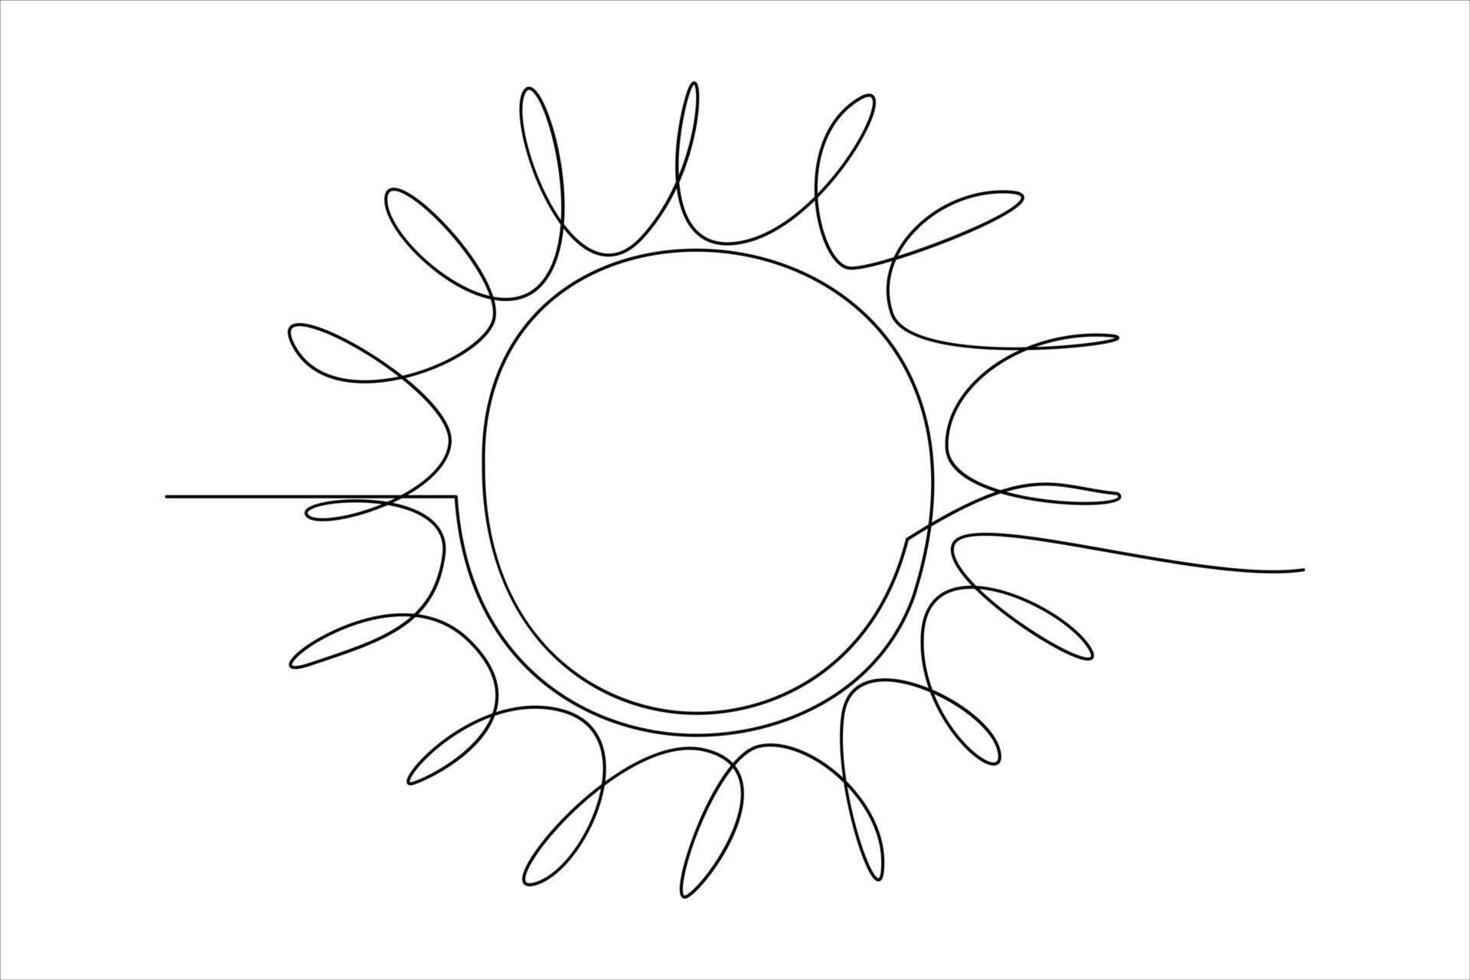 kontinuerlig ett linje teckning Sol konst sommar Sol kontur linje tecken linje konst illustration vektor